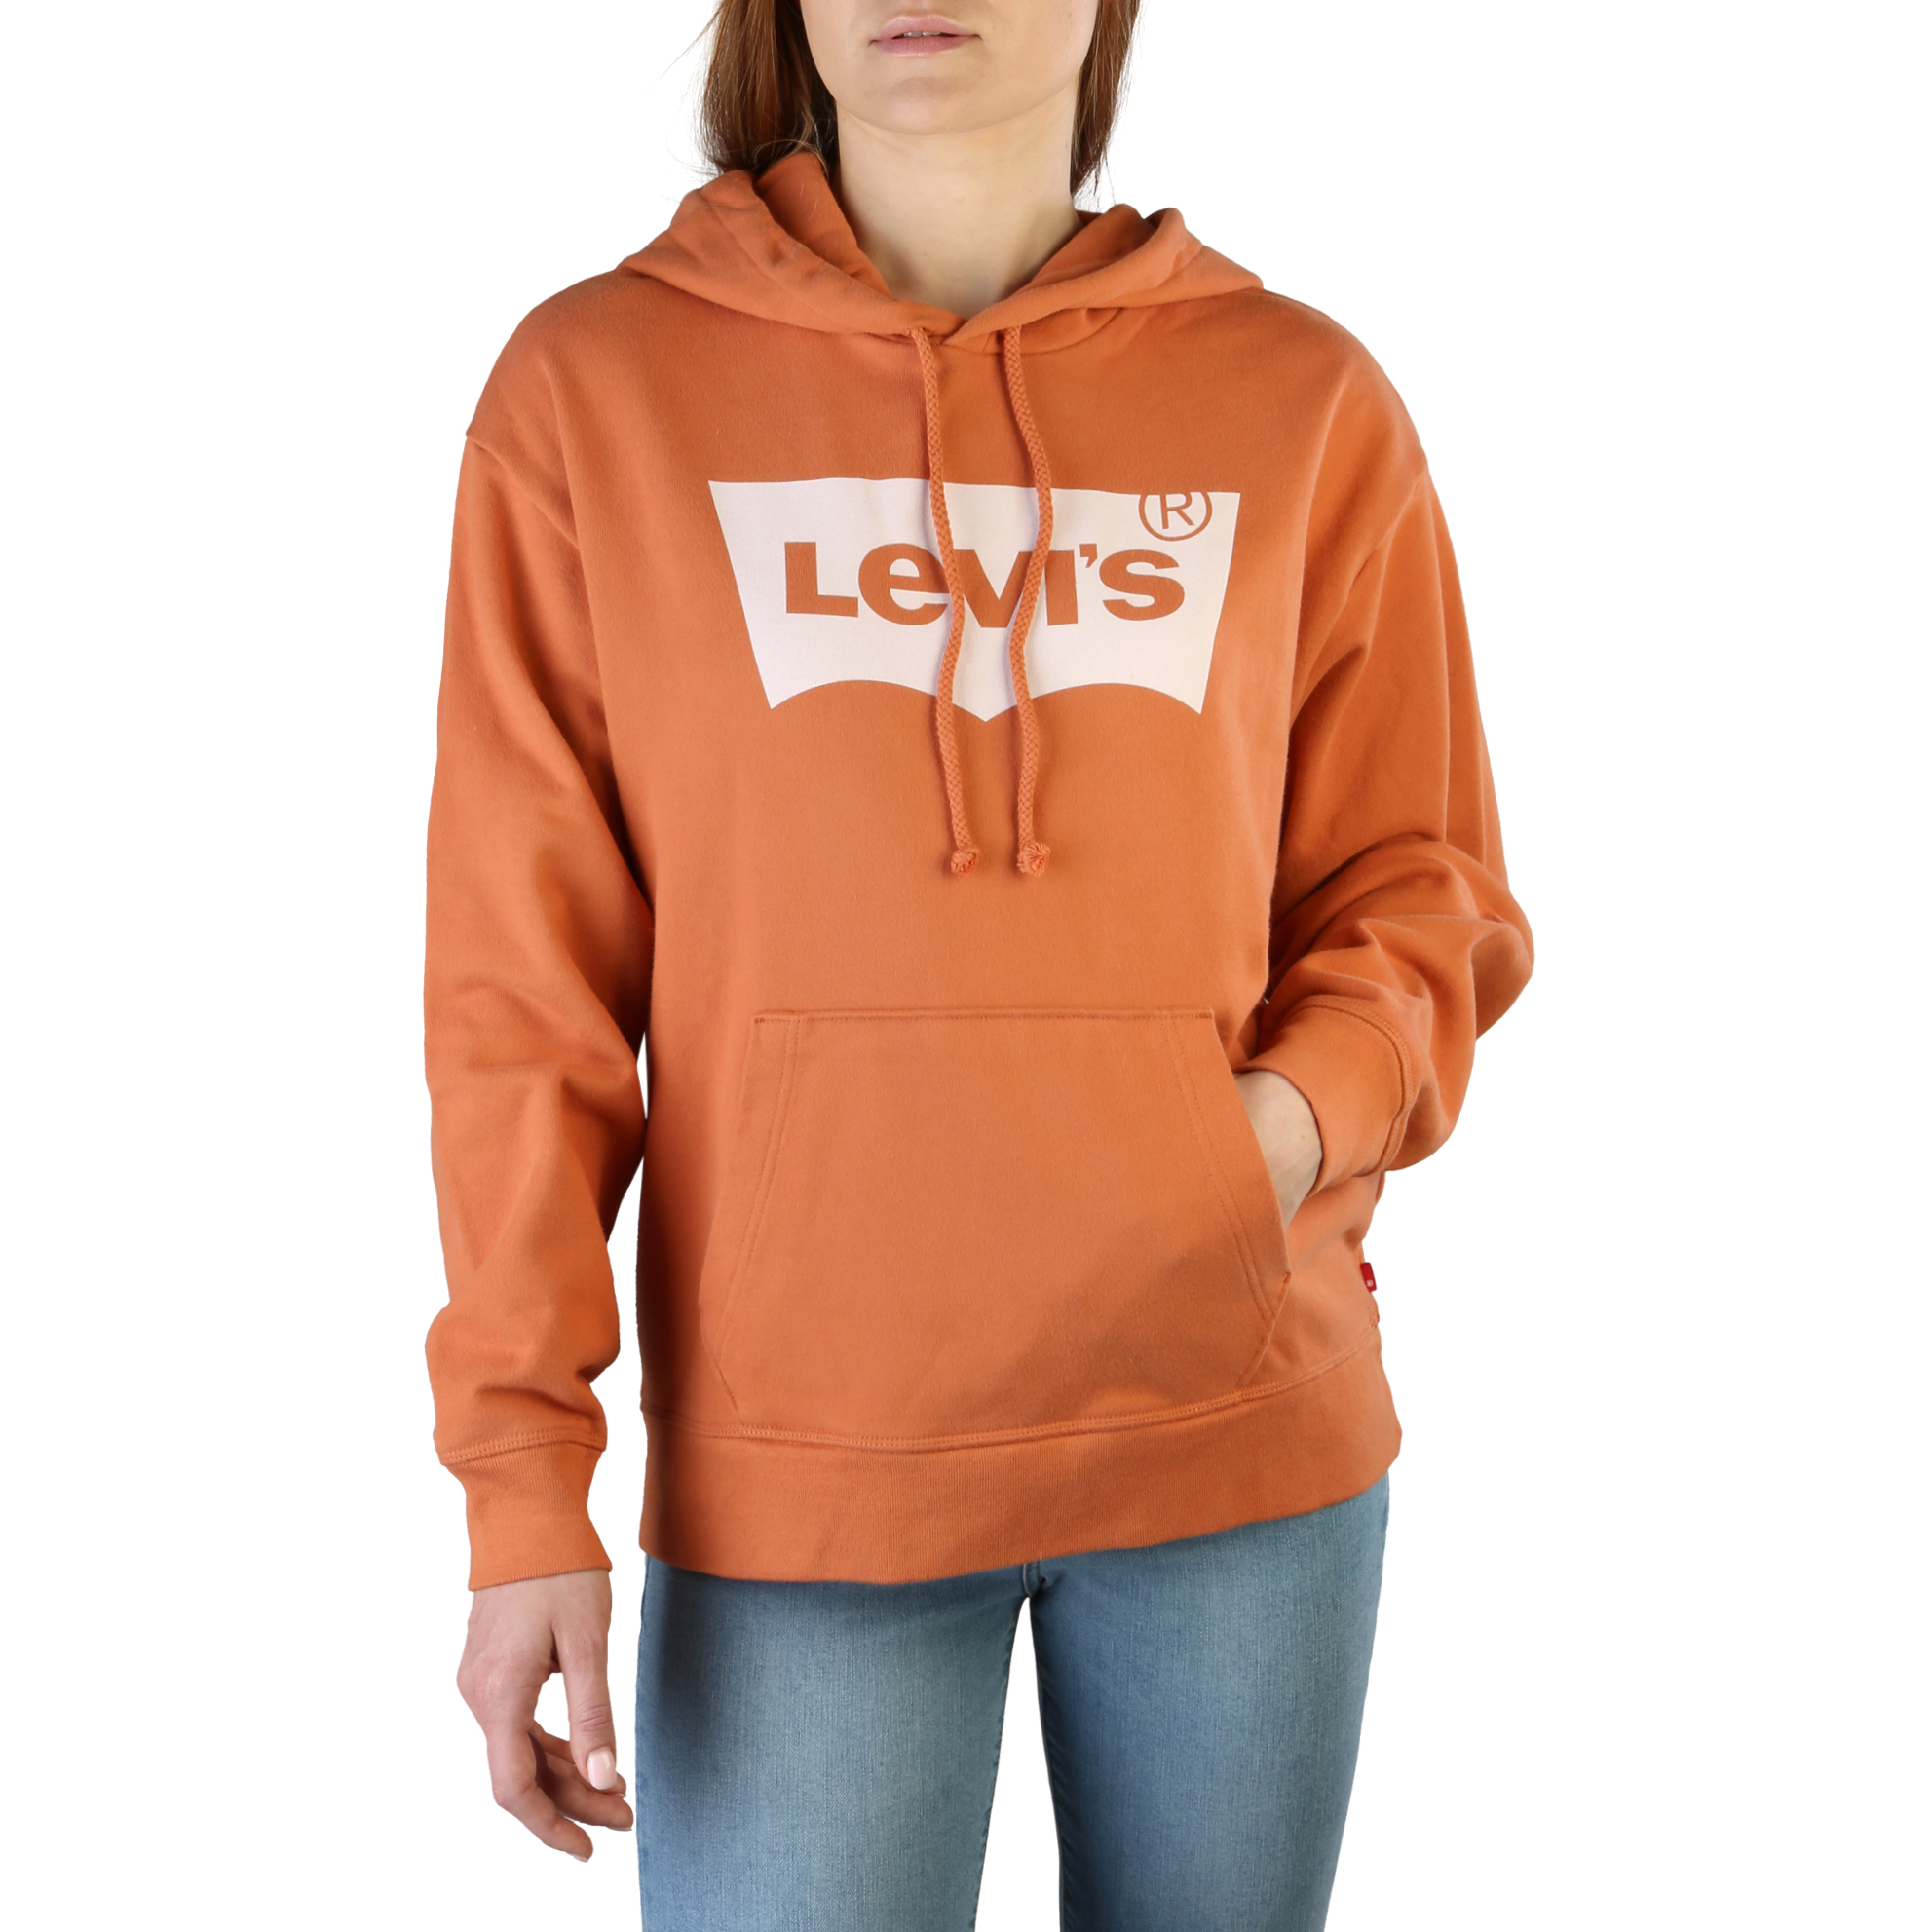 Levi's Orange Sweatshirts for Women - 18487_GRAPHIC